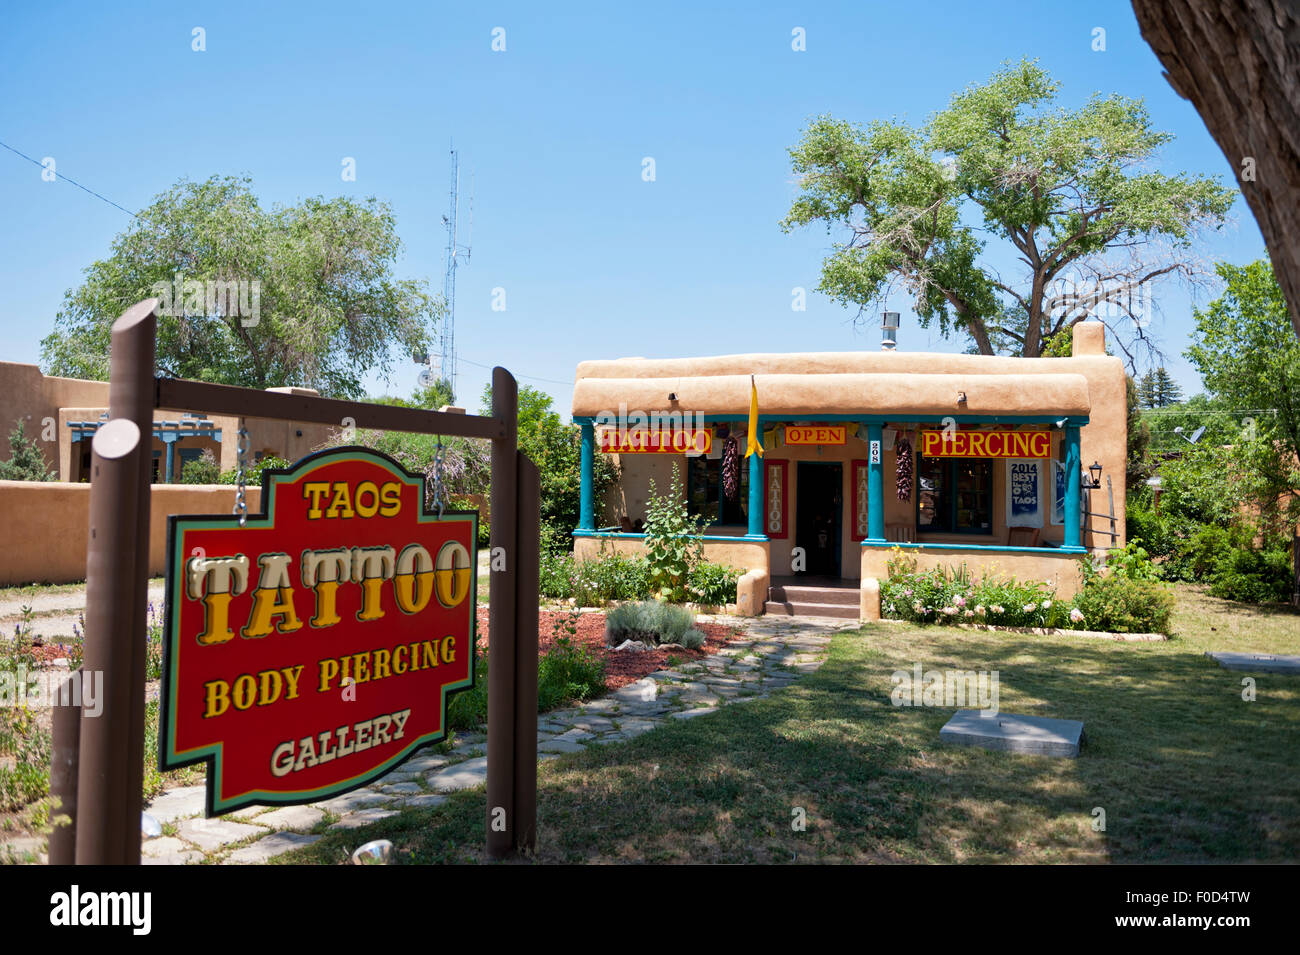 Taos tattoo e body piercing shop, Taos New Mexico Foto Stock